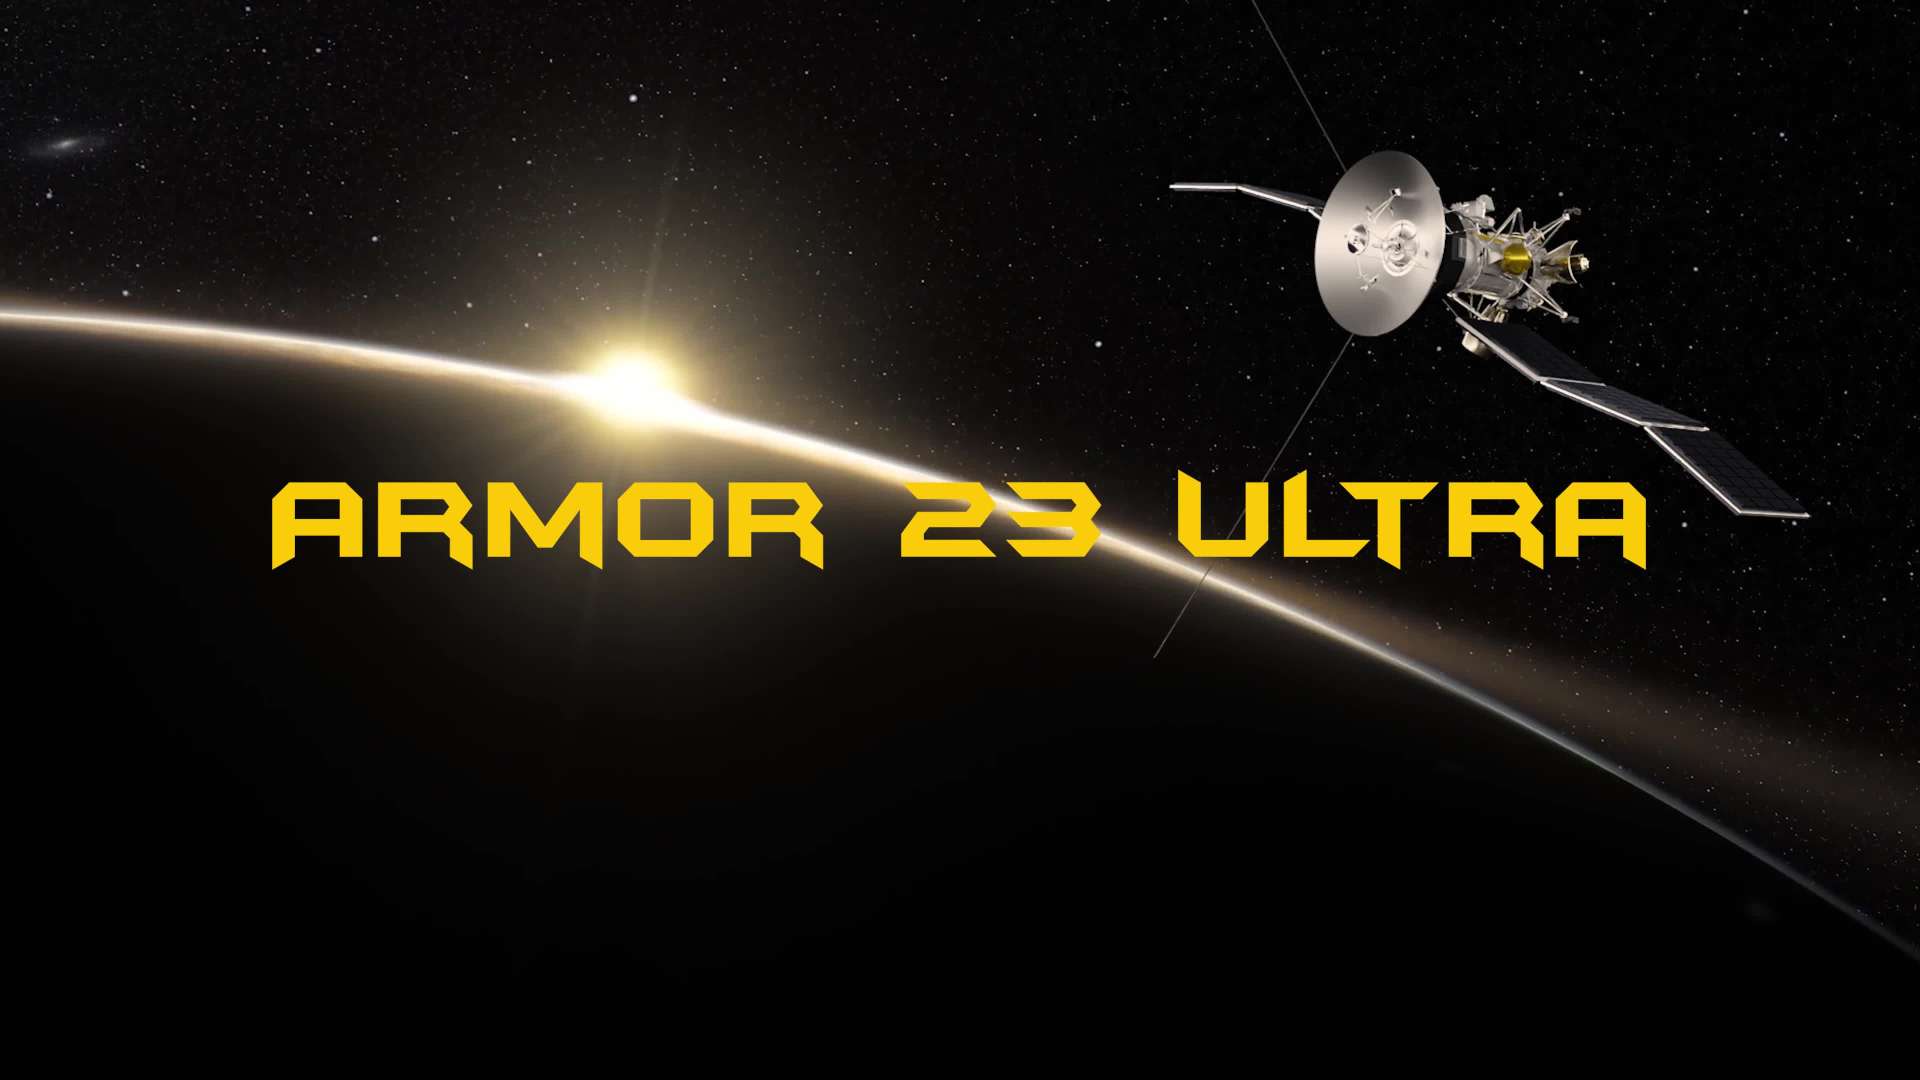 Armor 23 Ultra 主视频